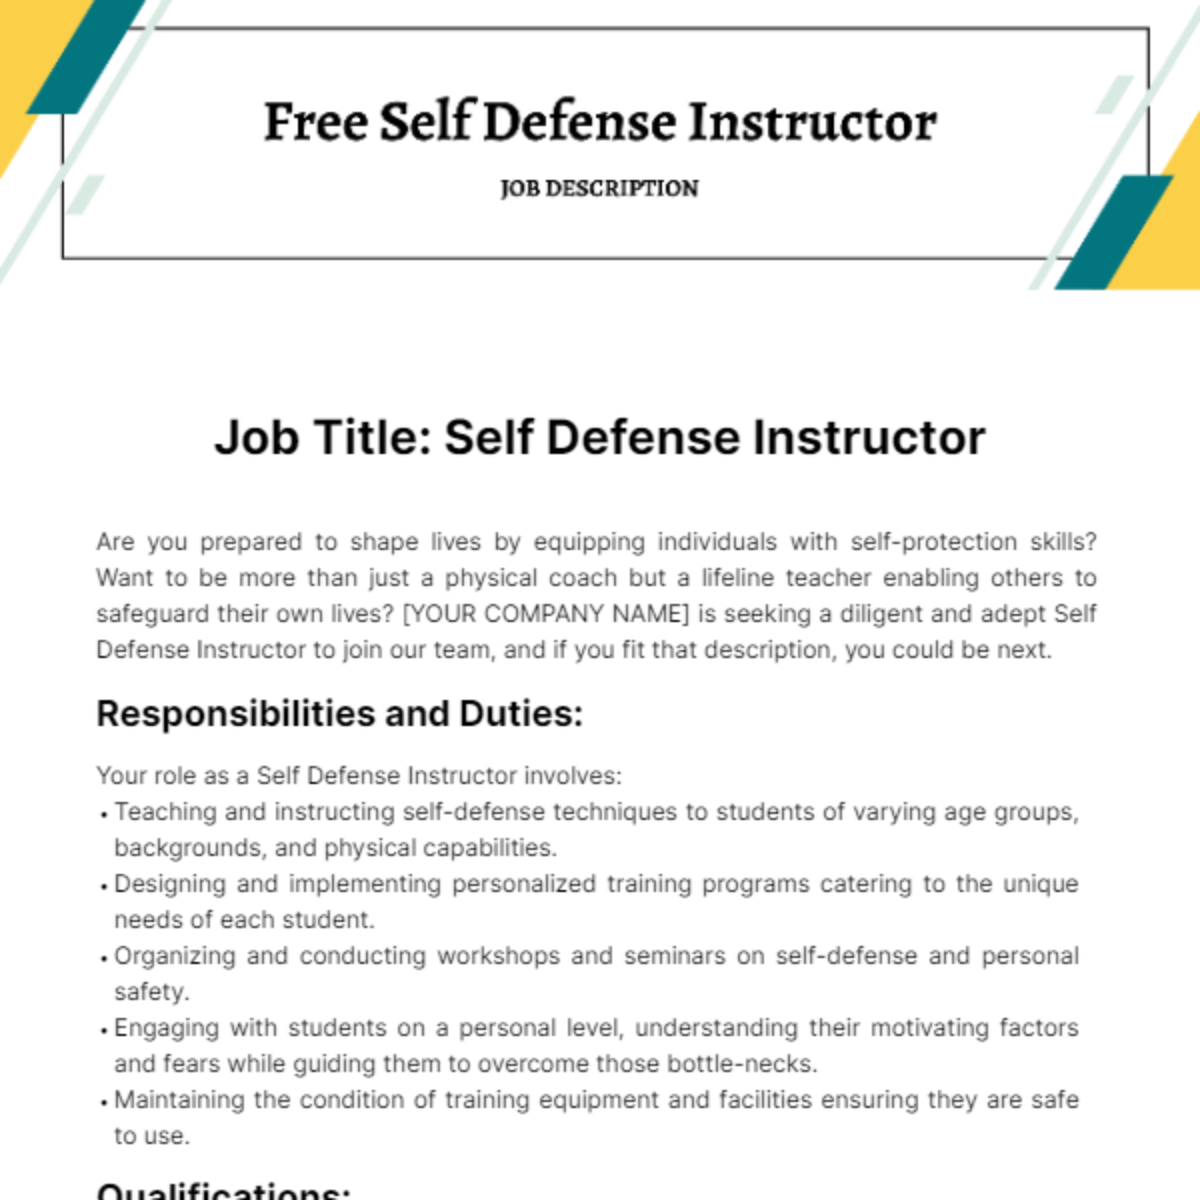 Free Self Defense Instructor Job Description Template